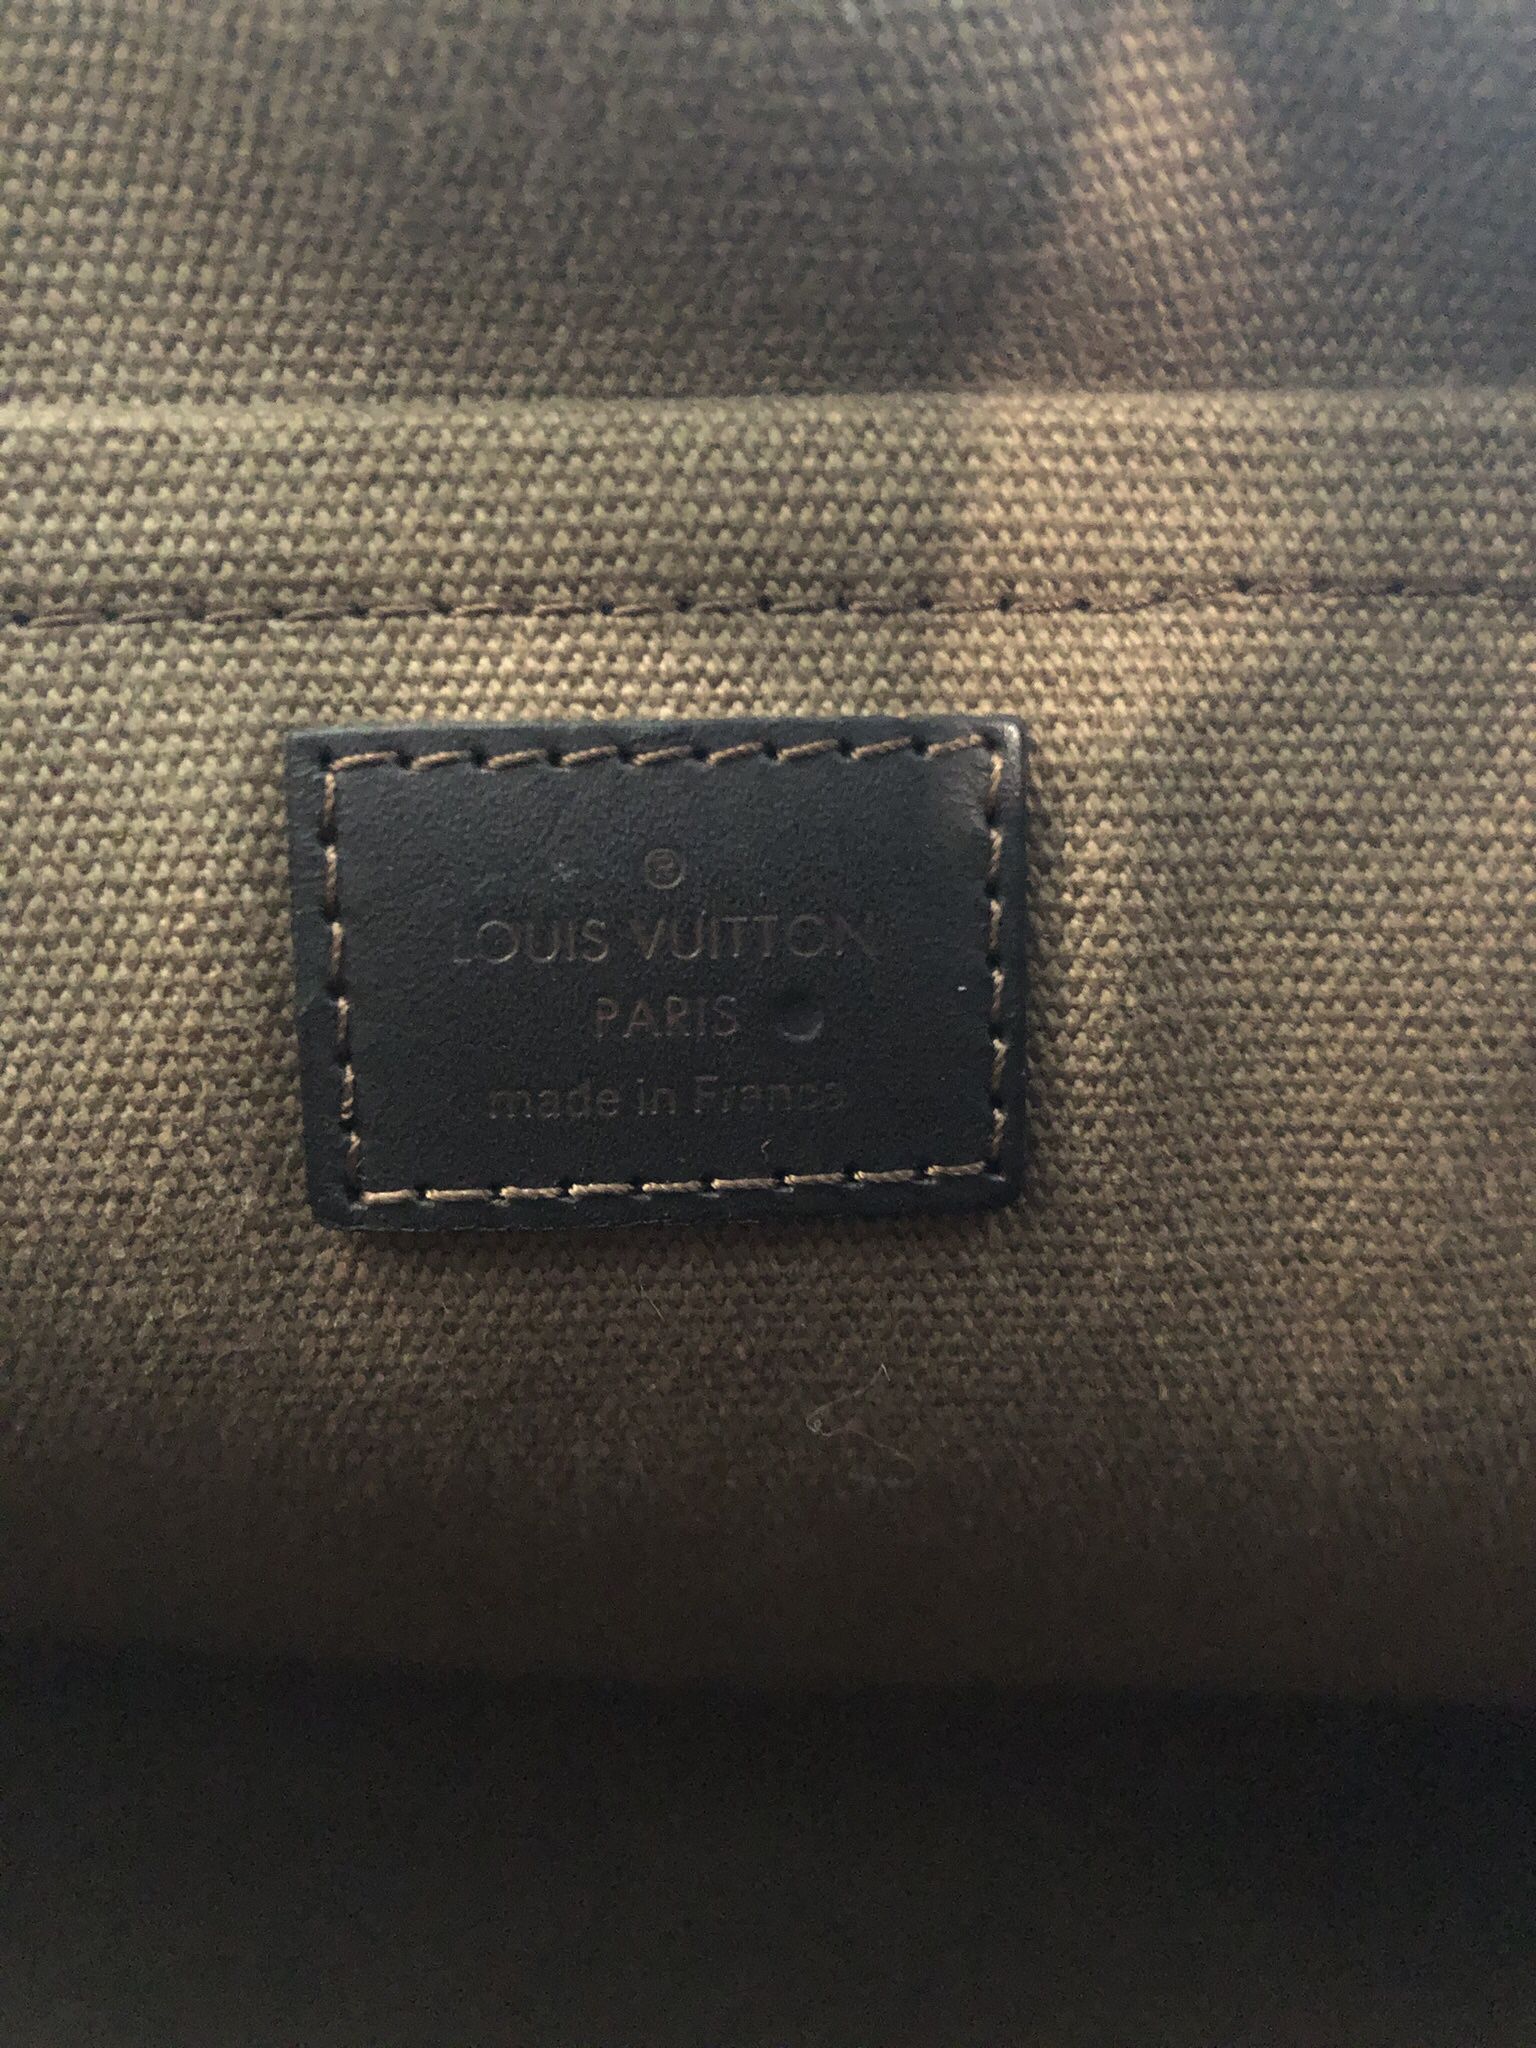 LOUIS VUITTON Utah Omaha Messenger Shoulder Bag for Sale in Miami, FL -  OfferUp